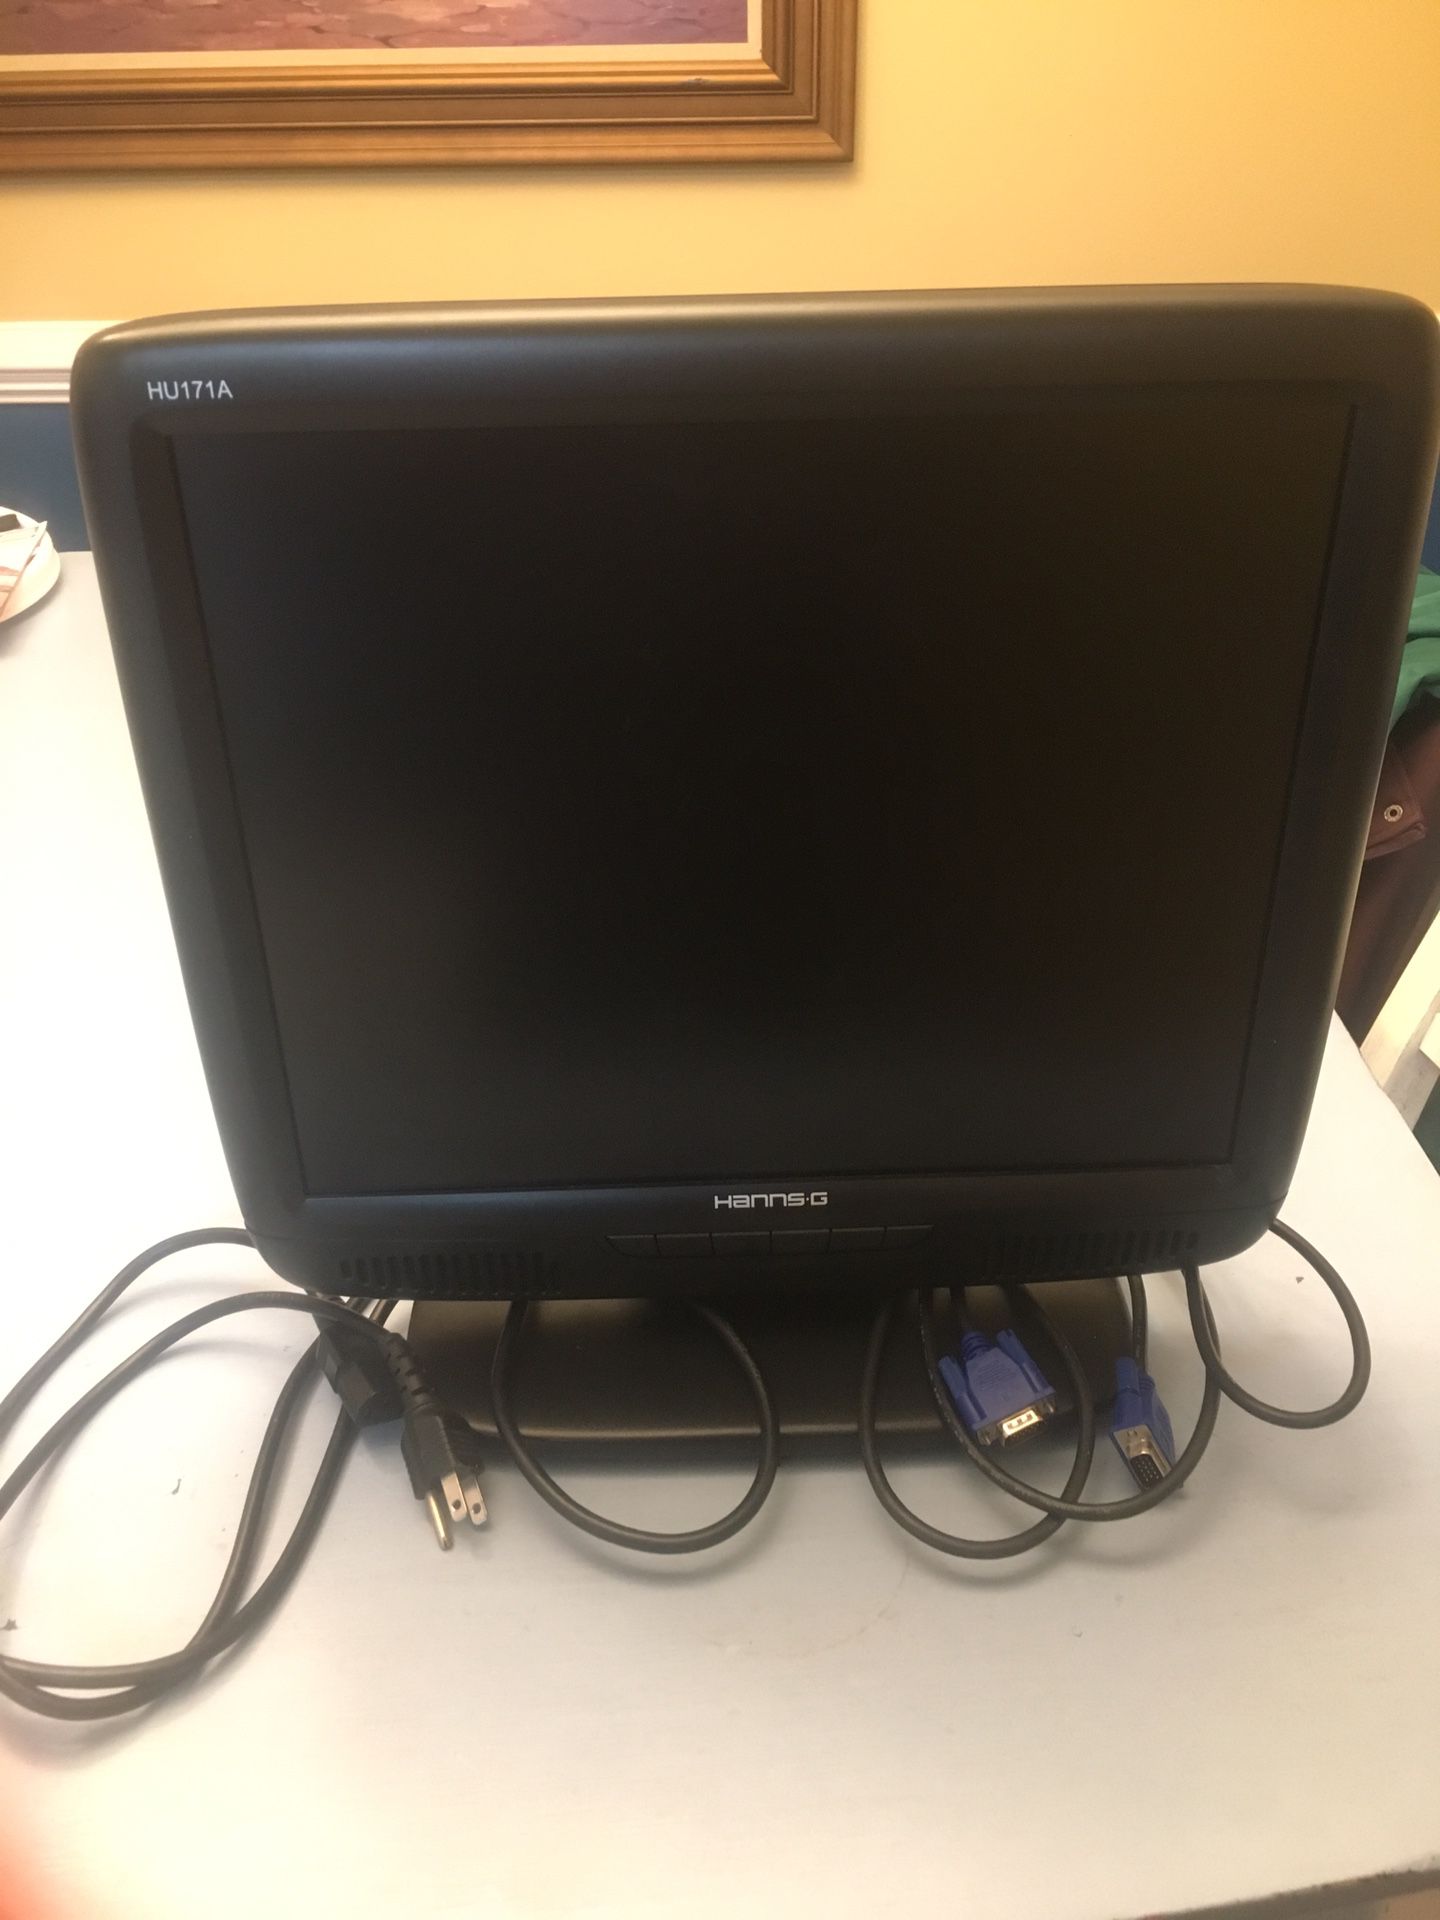 HANNS.G HU171 - LCD monitor - 17"